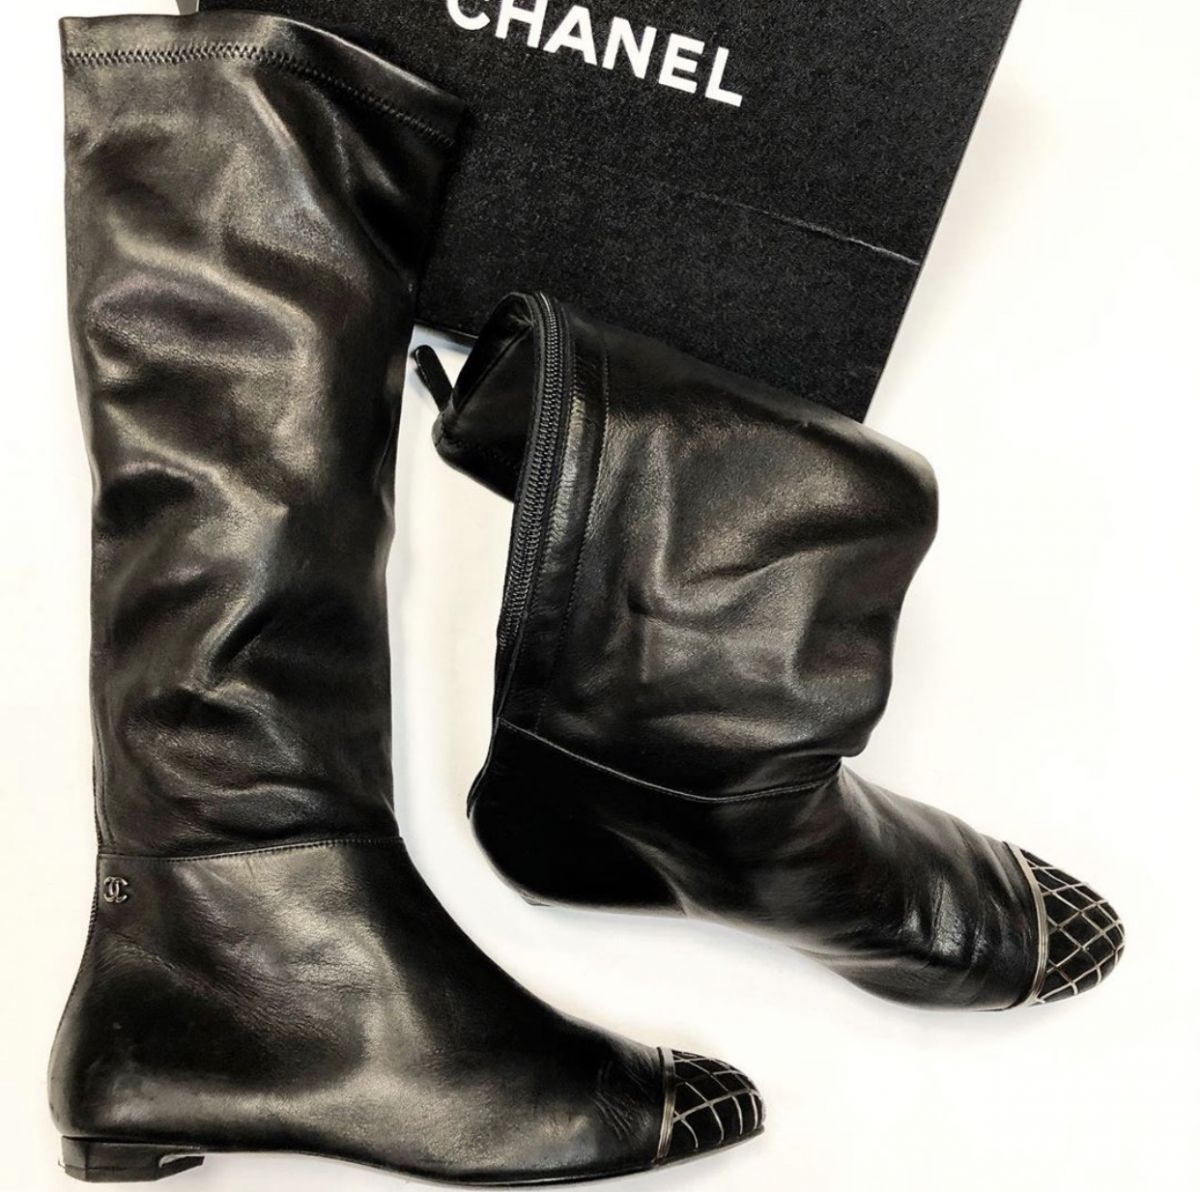 Сапоги Chanel  размер 38 цена 15 385 руб